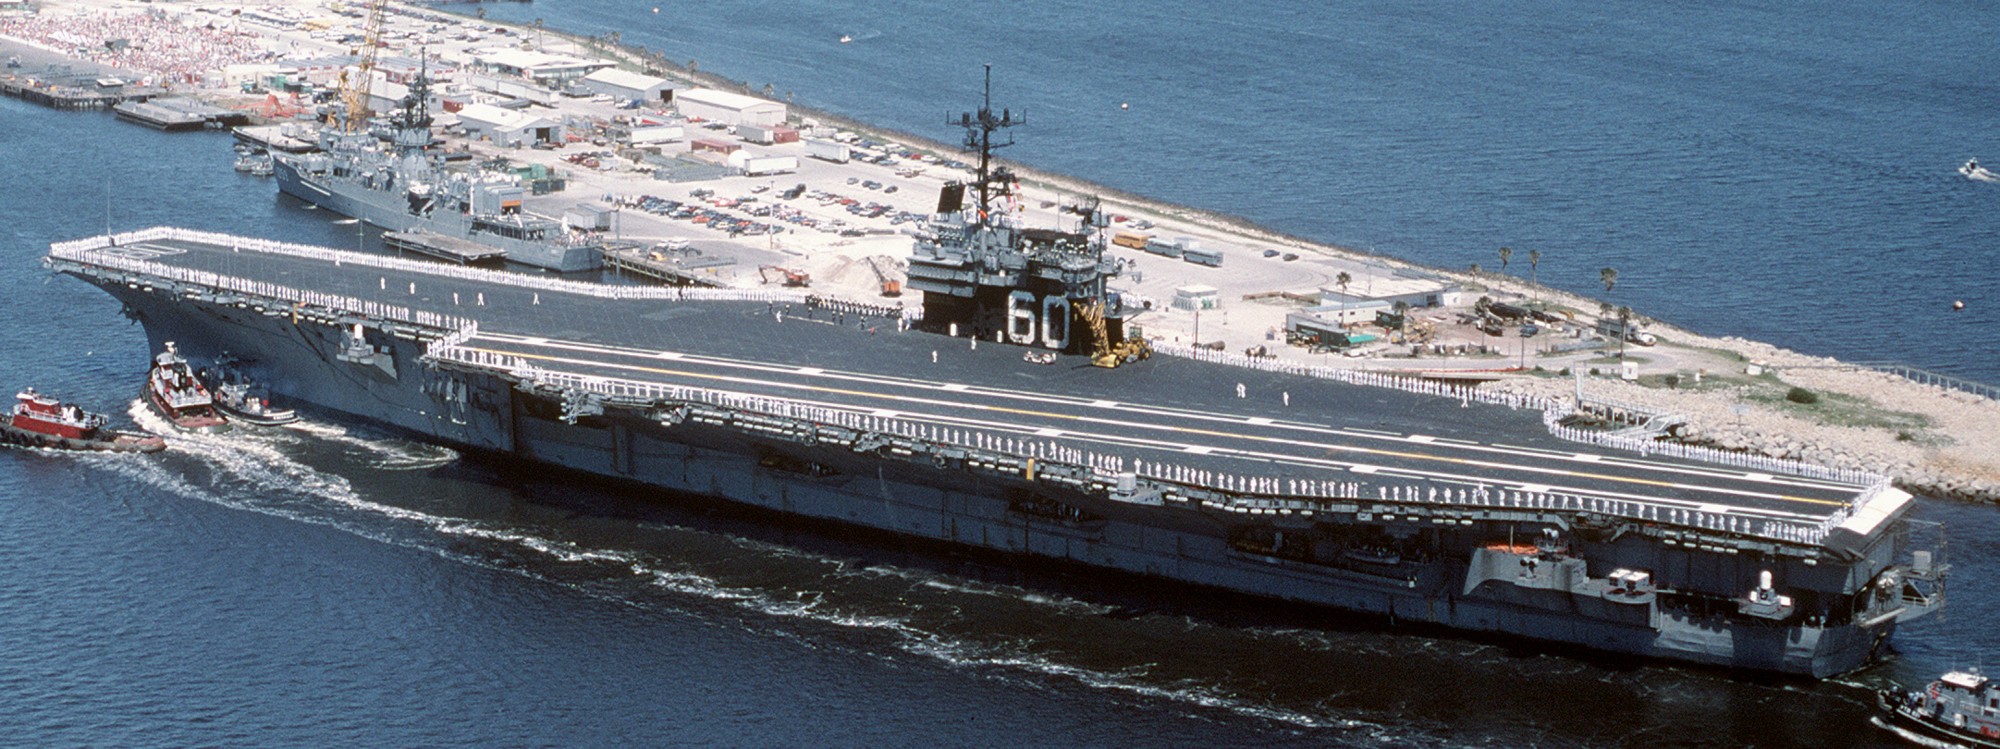 cv-60 uss saratoga forrestal class aircraft carrier us navy 101